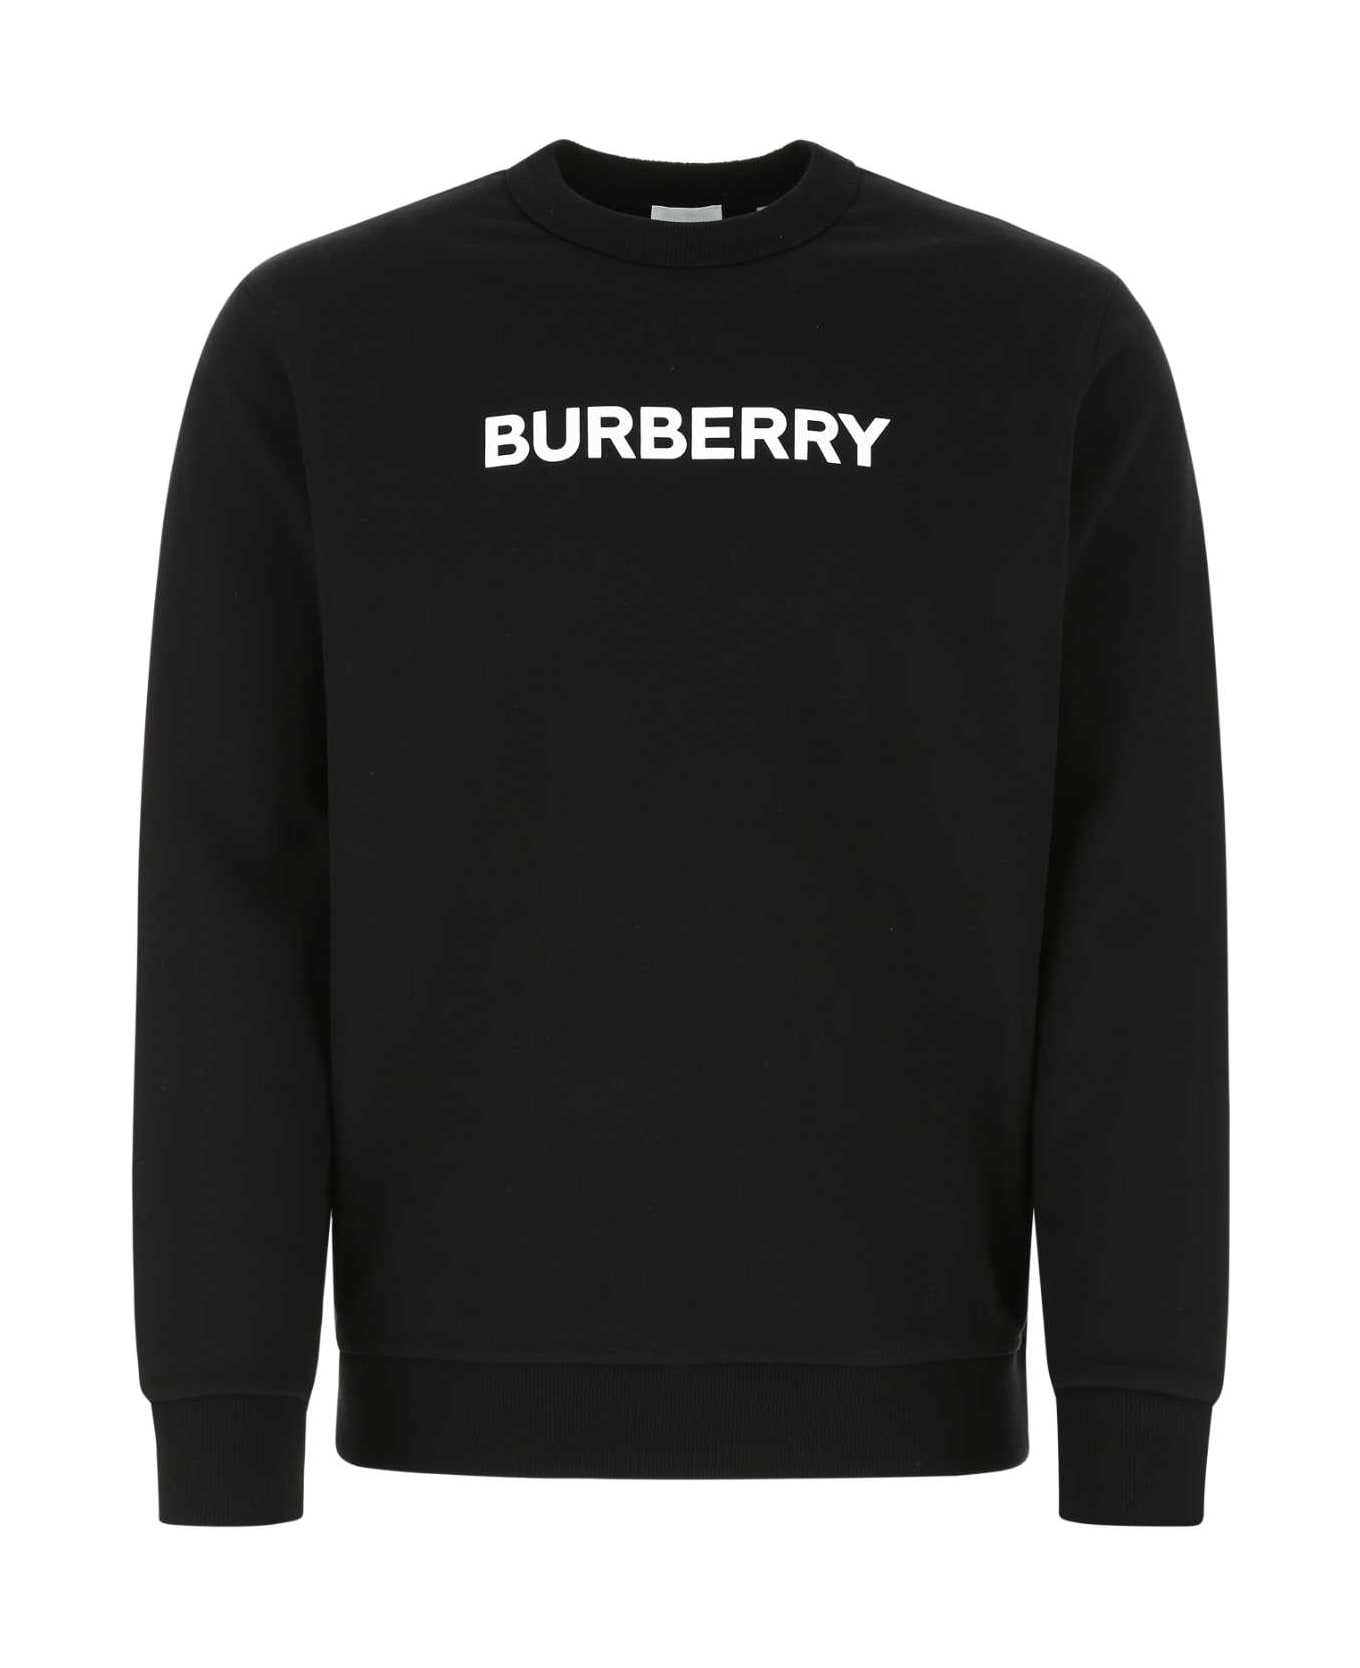 Burberry Black Cotton Sweatshirt - A1189